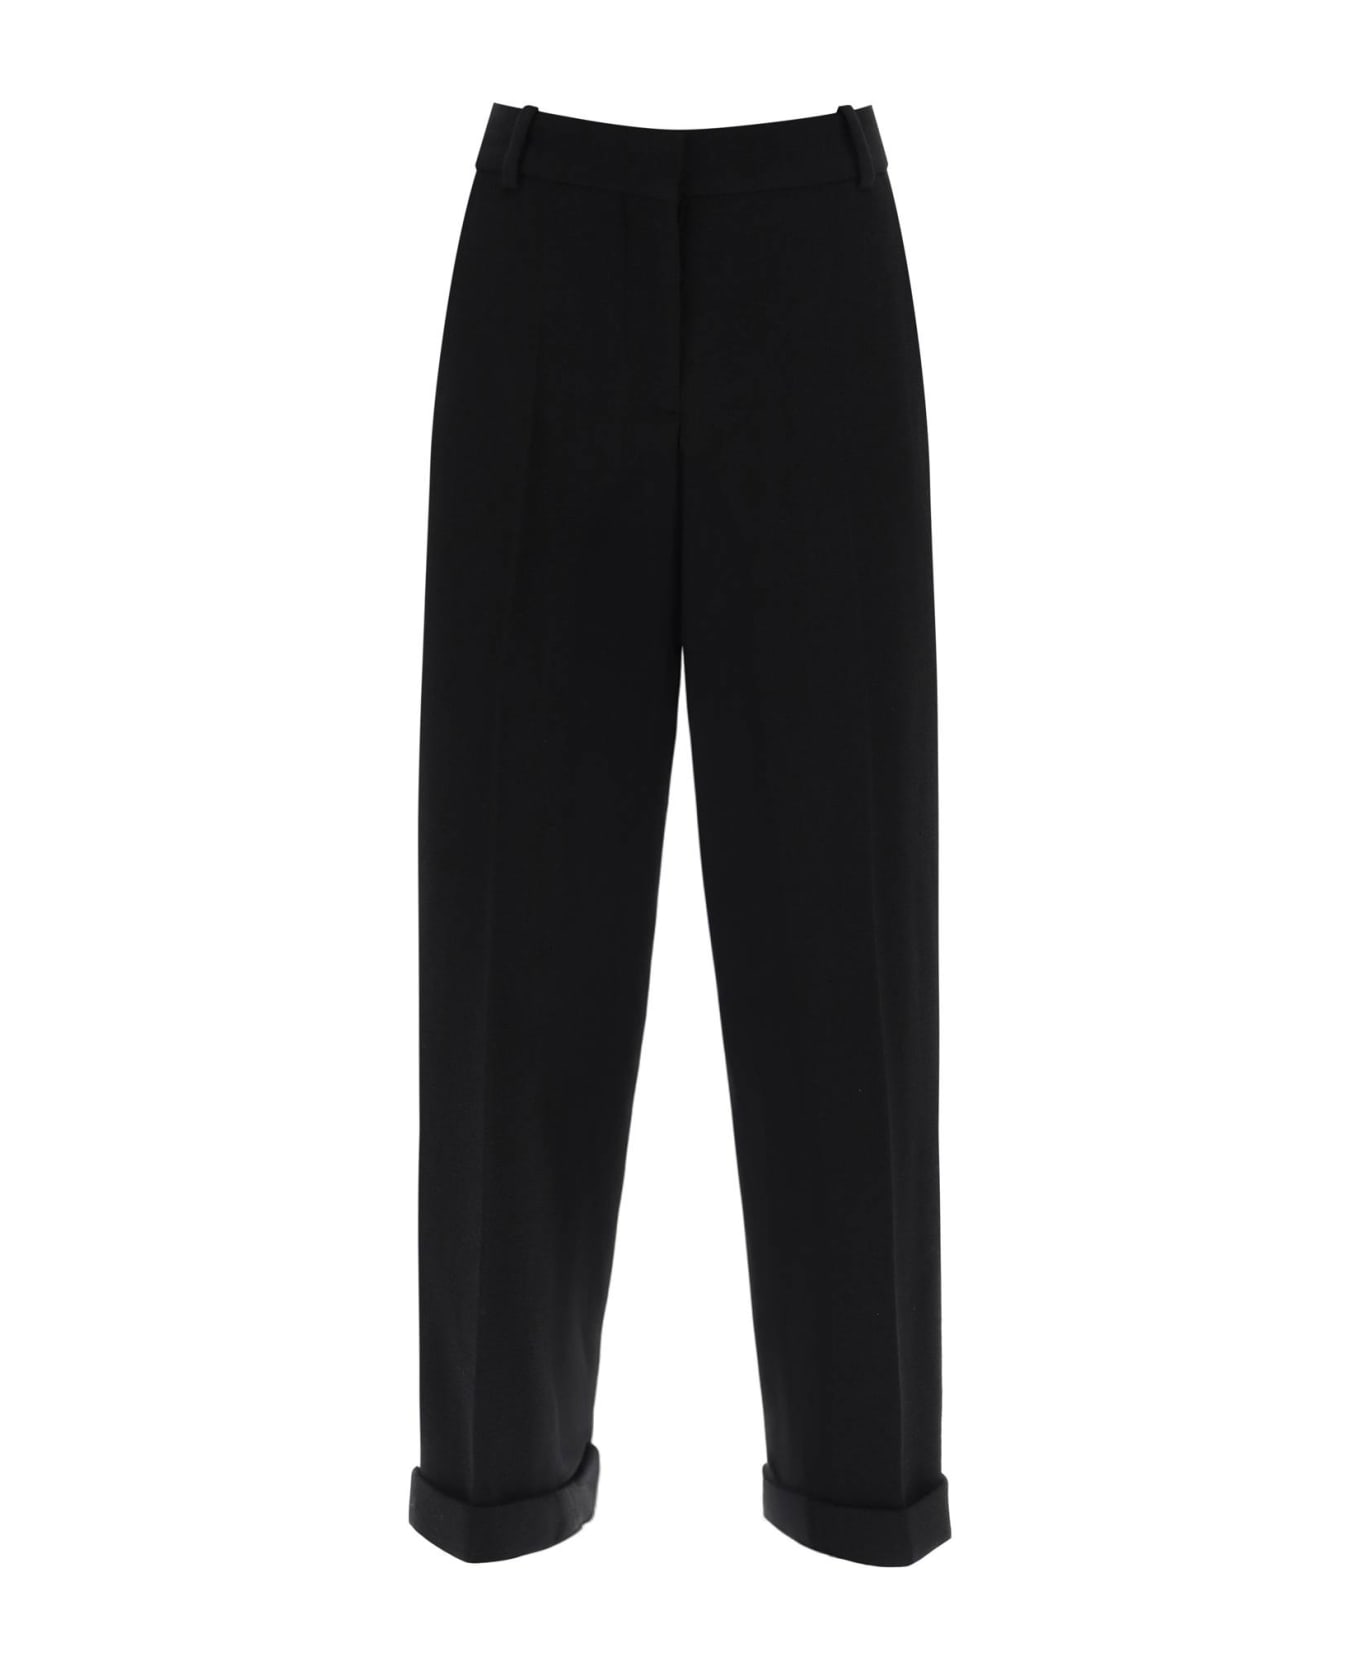 Balmain Cuffed Wool Crepe Trousers - NOIR (Black)